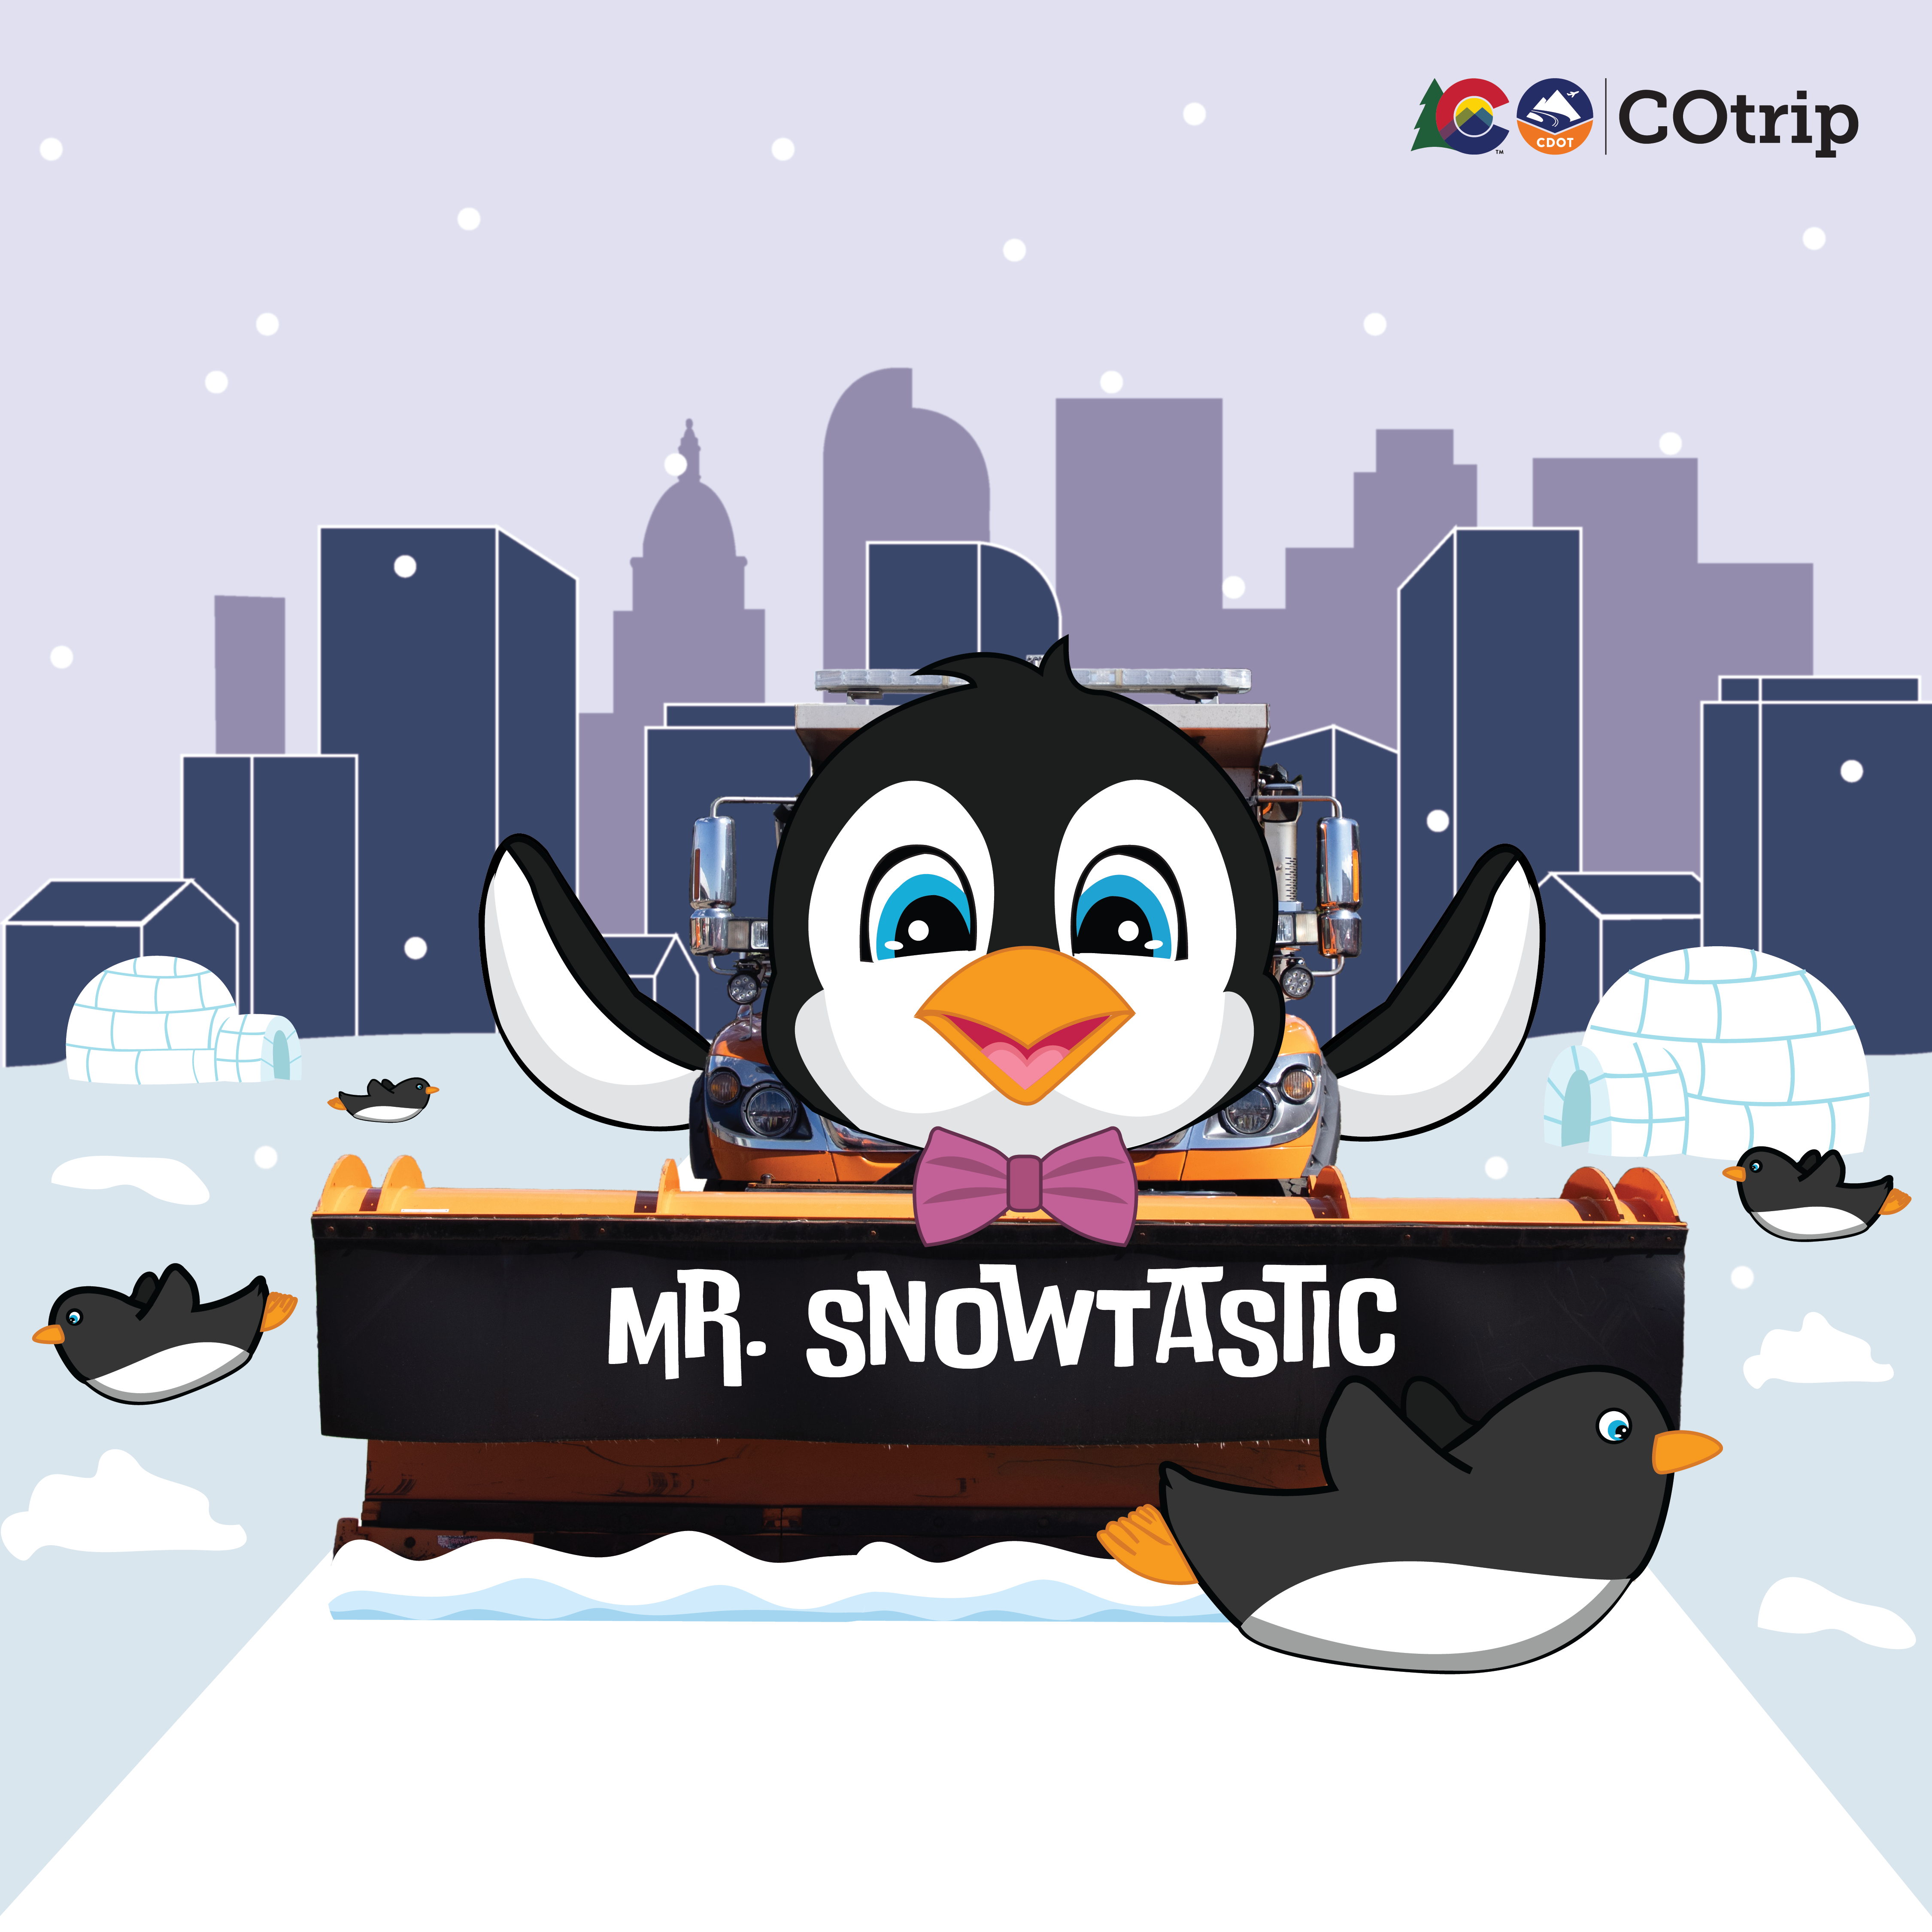 Mr. Snowtastic Snowplow detail image